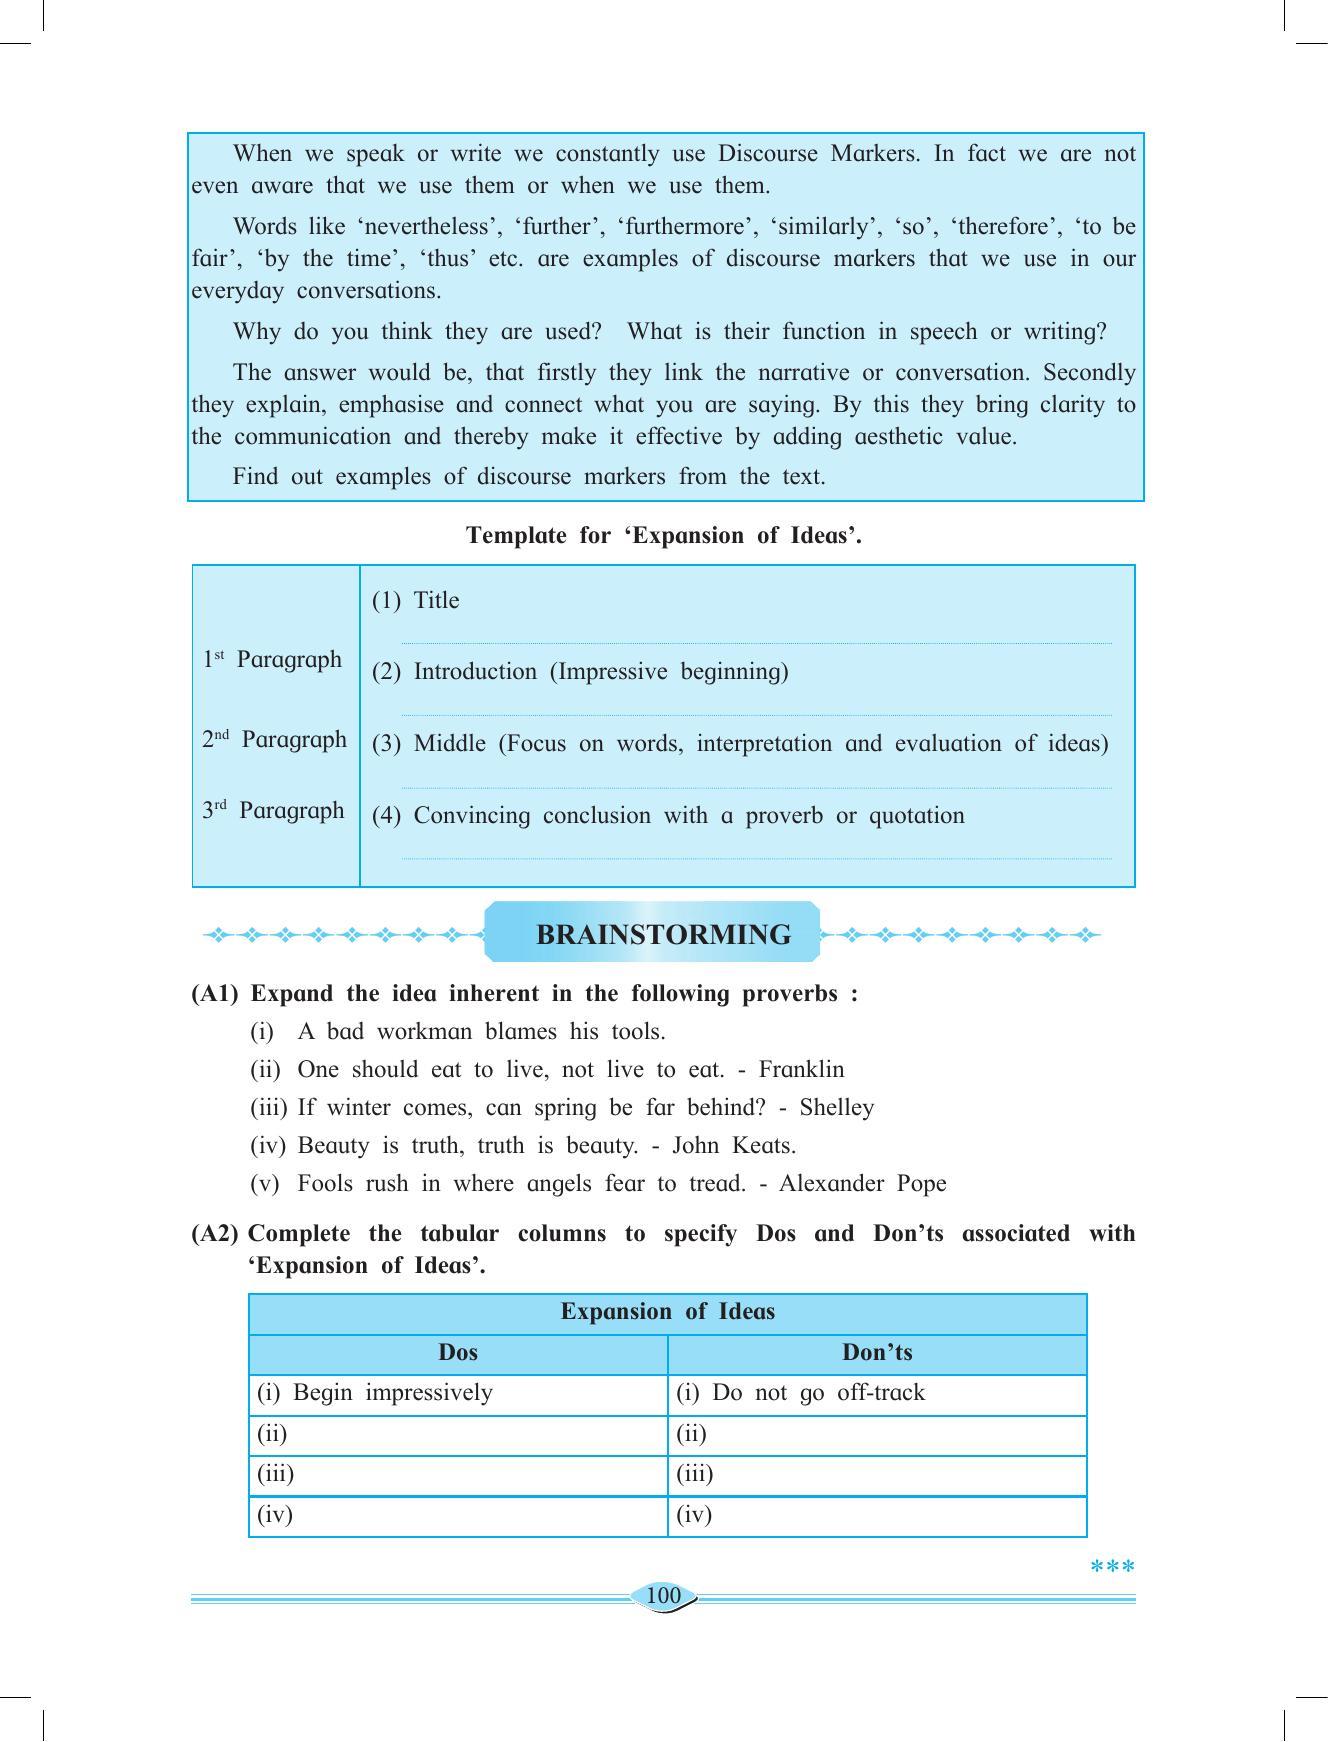 Maharashtra Board Class 11 English Textbook - Page 114